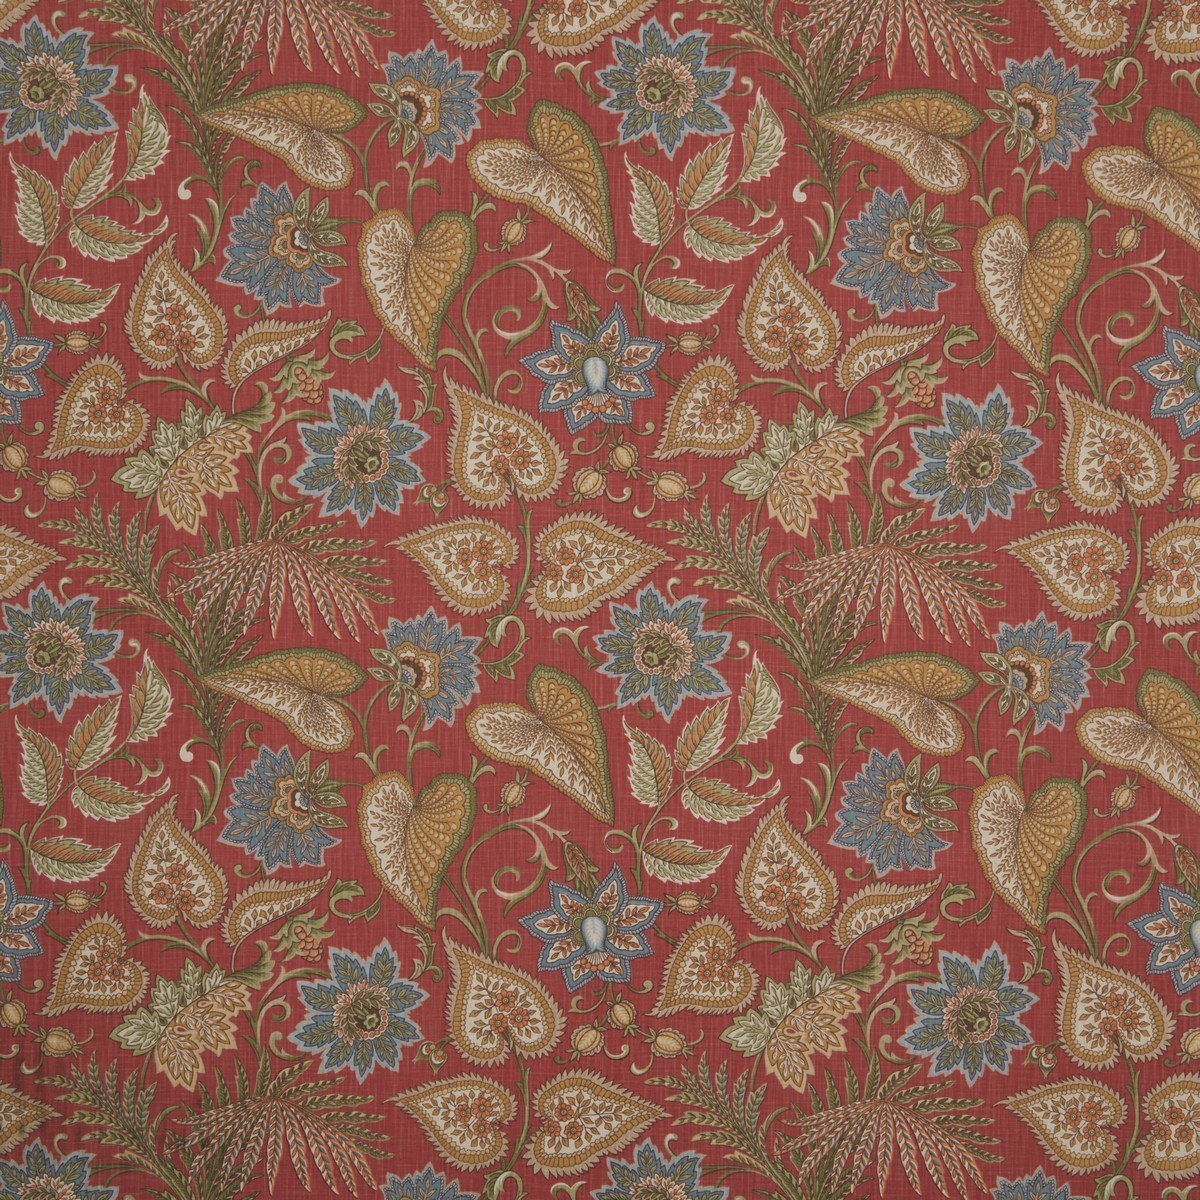 Morris XXIX Fabric by Britannia Rose